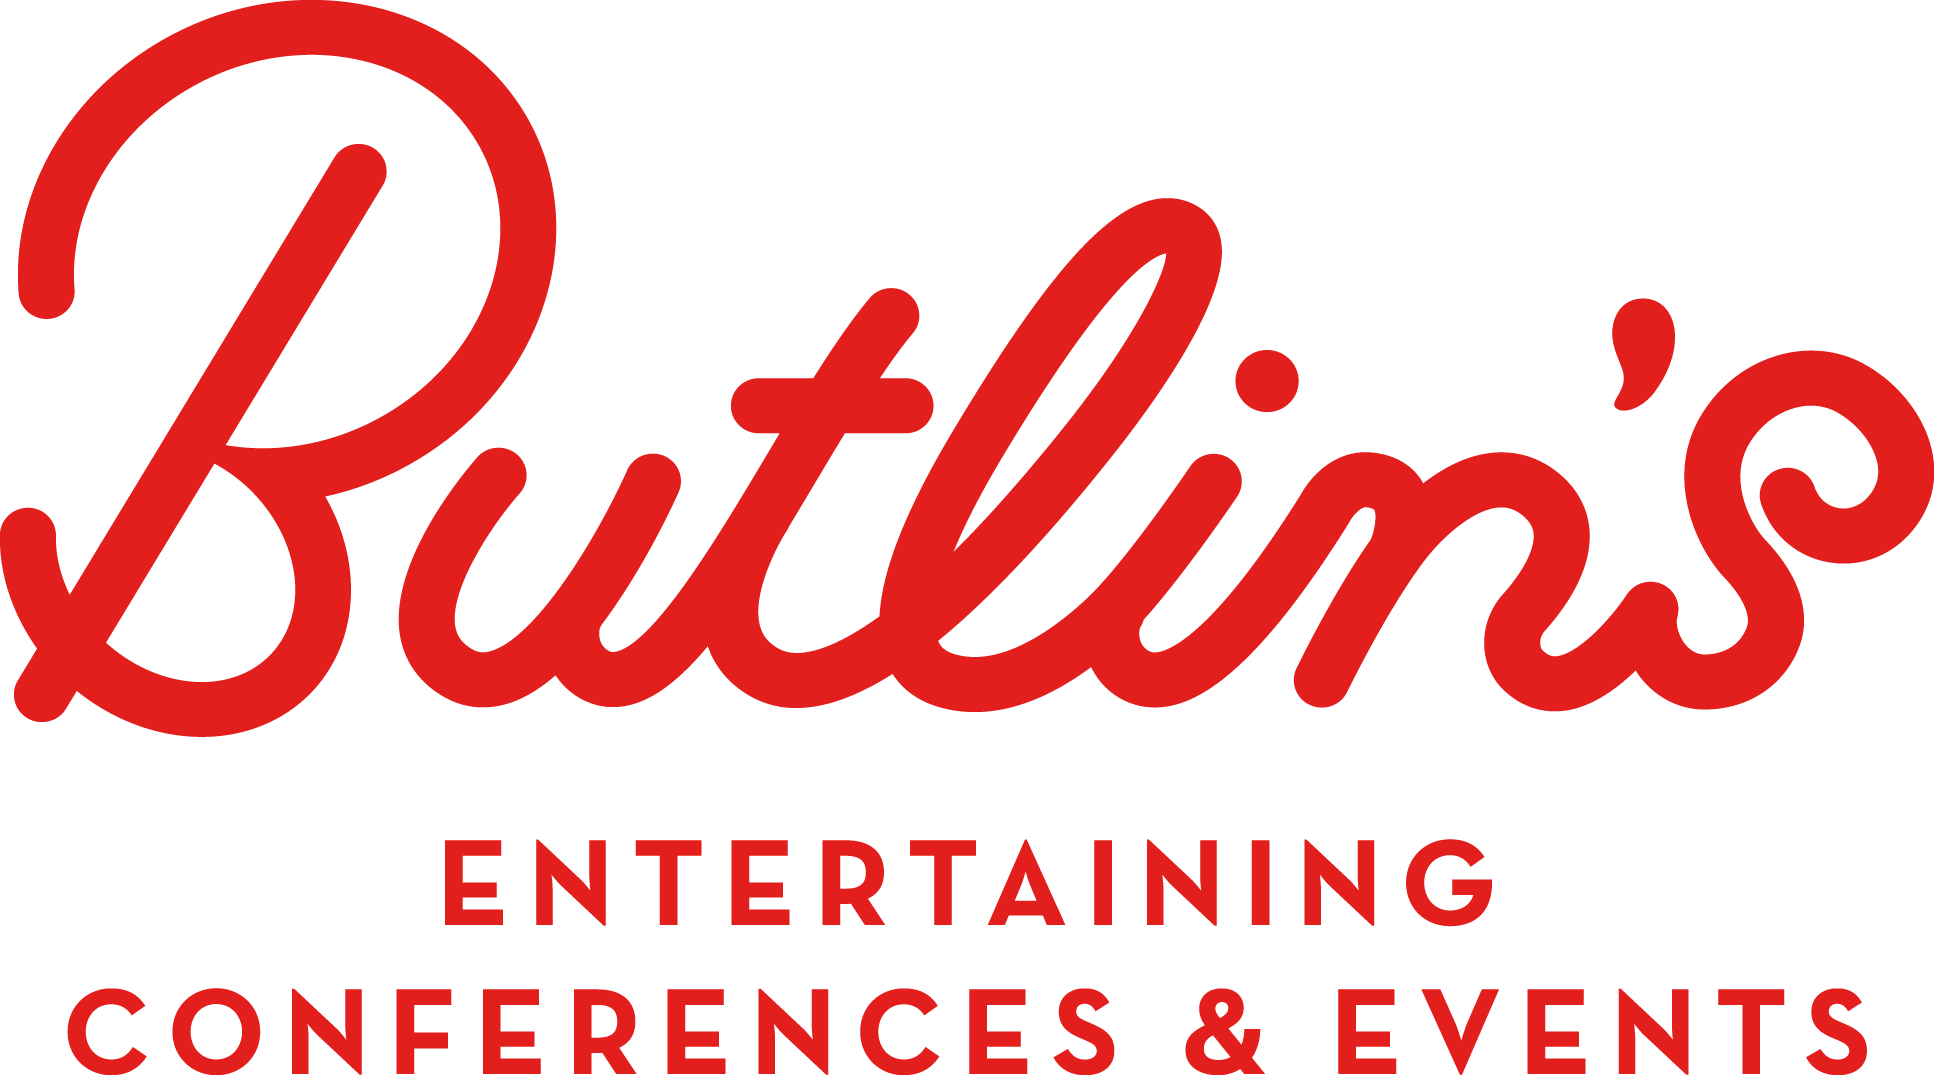 Butlin’s to host CHS Inspirational Venue Roadshow